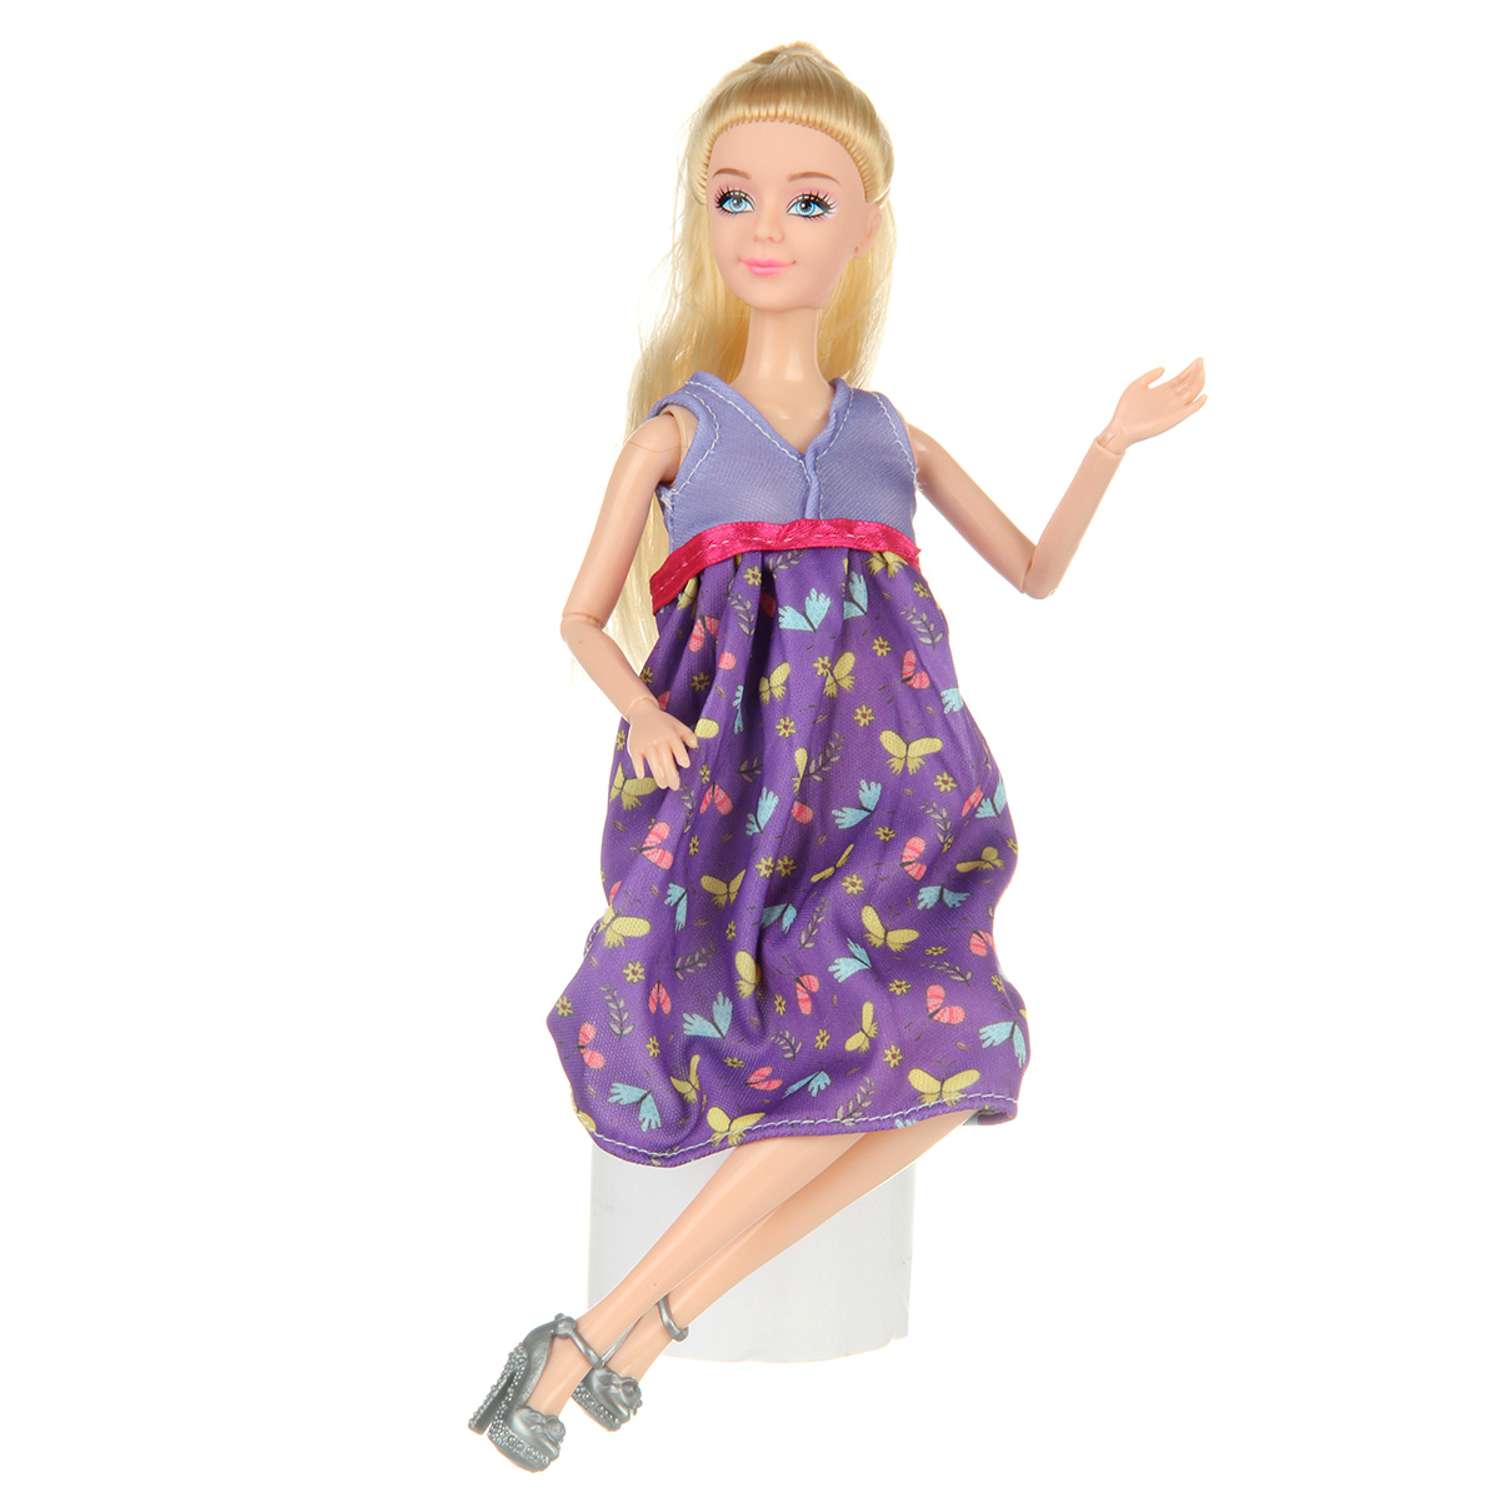 Кукла модель Барби Veld Co будущая мама 132274 - фото 10